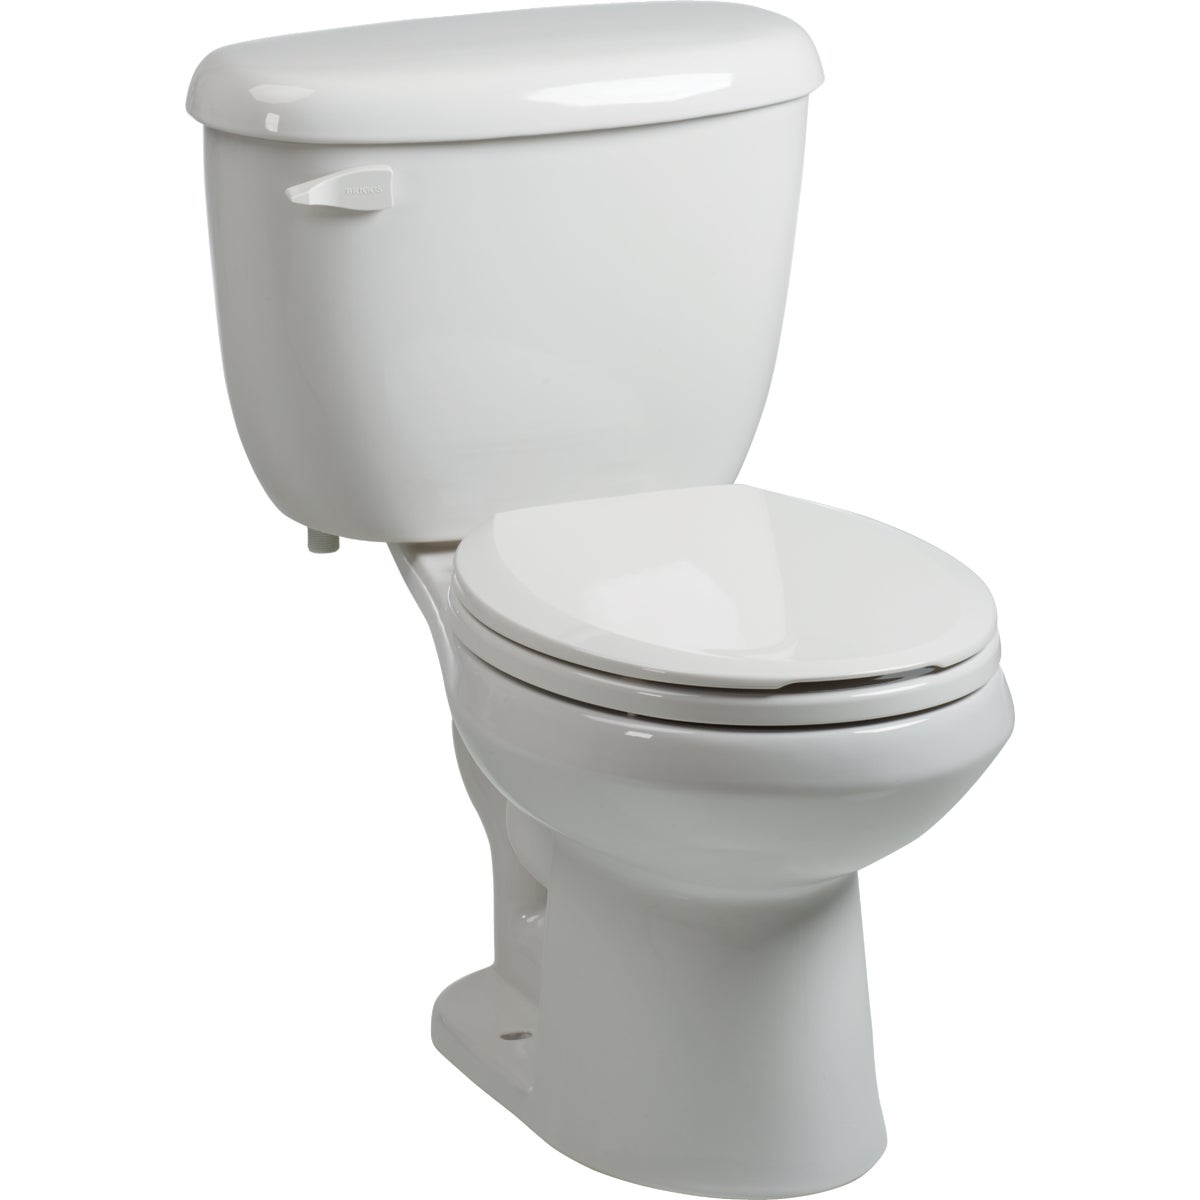 Item 401521, Complete toilet with 1000 gram MAP (Maximum Achievable Pressure) rating.